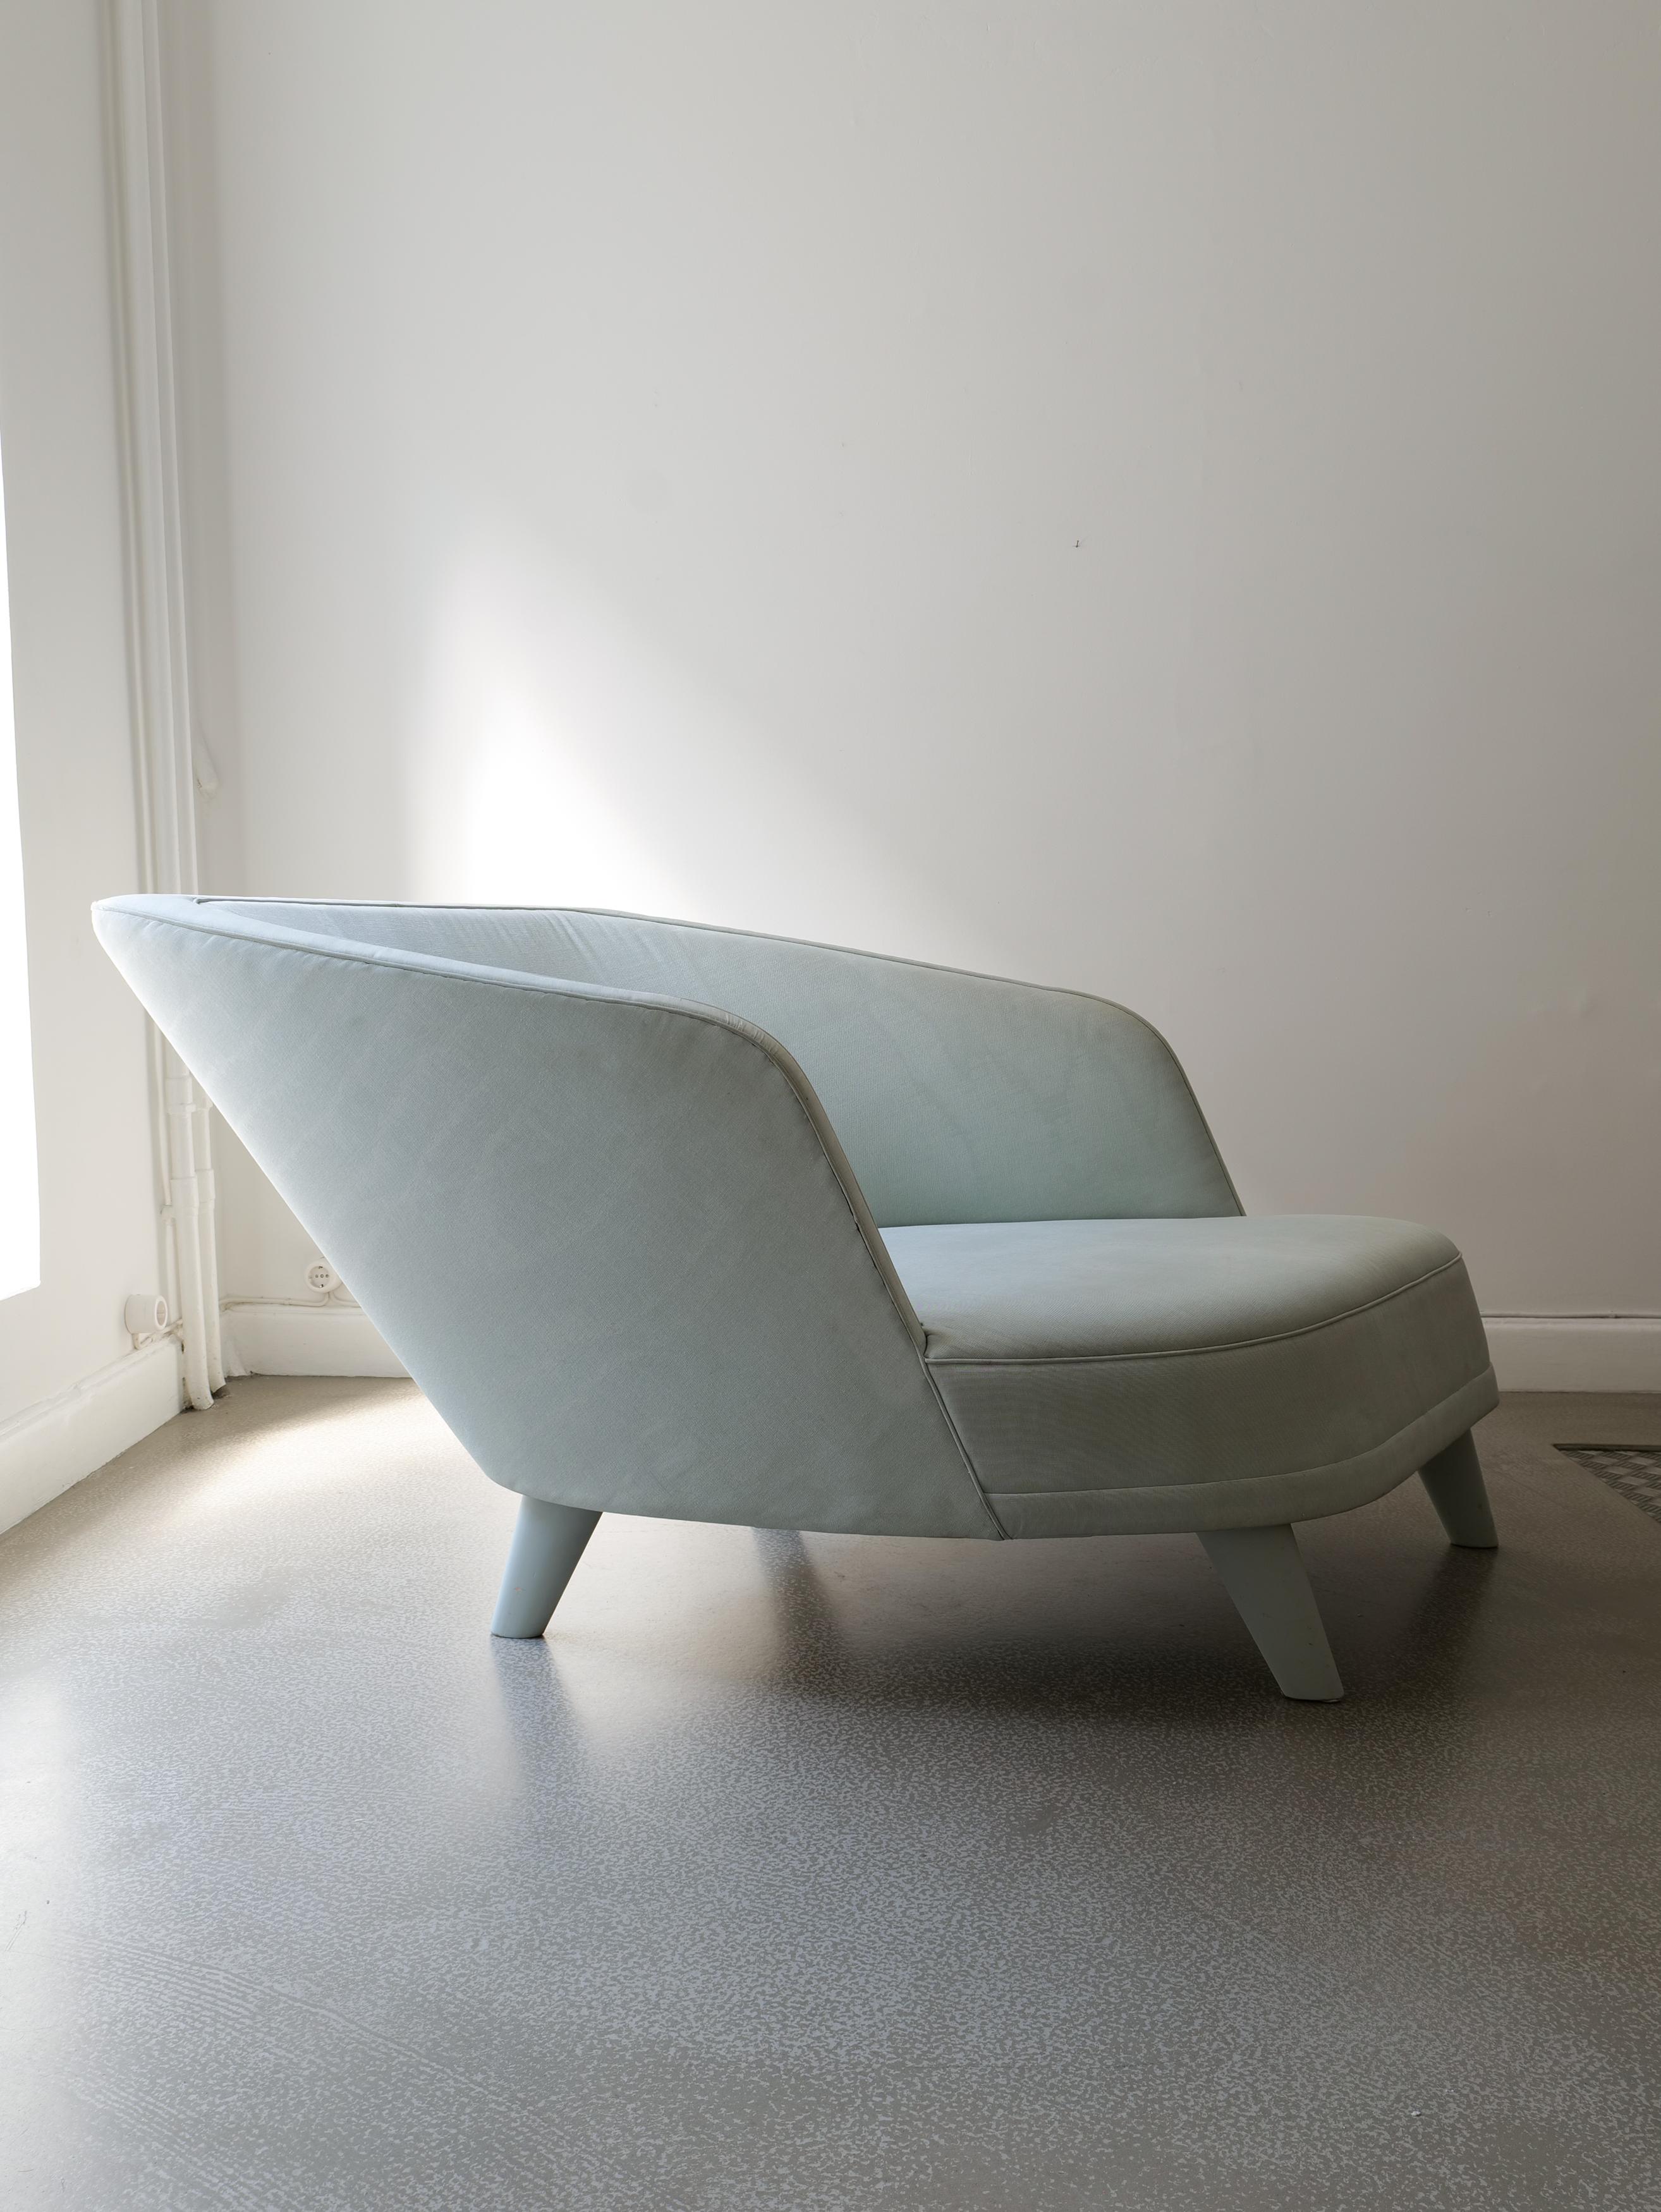 Nya Berlin chair designed in 2010 by Andreas Bozarth Fornell (born 1977), Christian Halleröd (born 1974) and Jonny Johansson (Creative Director and co-founder Acne Studios. Born 1969). 

A 3D distorted design of a classic Swedish Carl Malmsten sofa